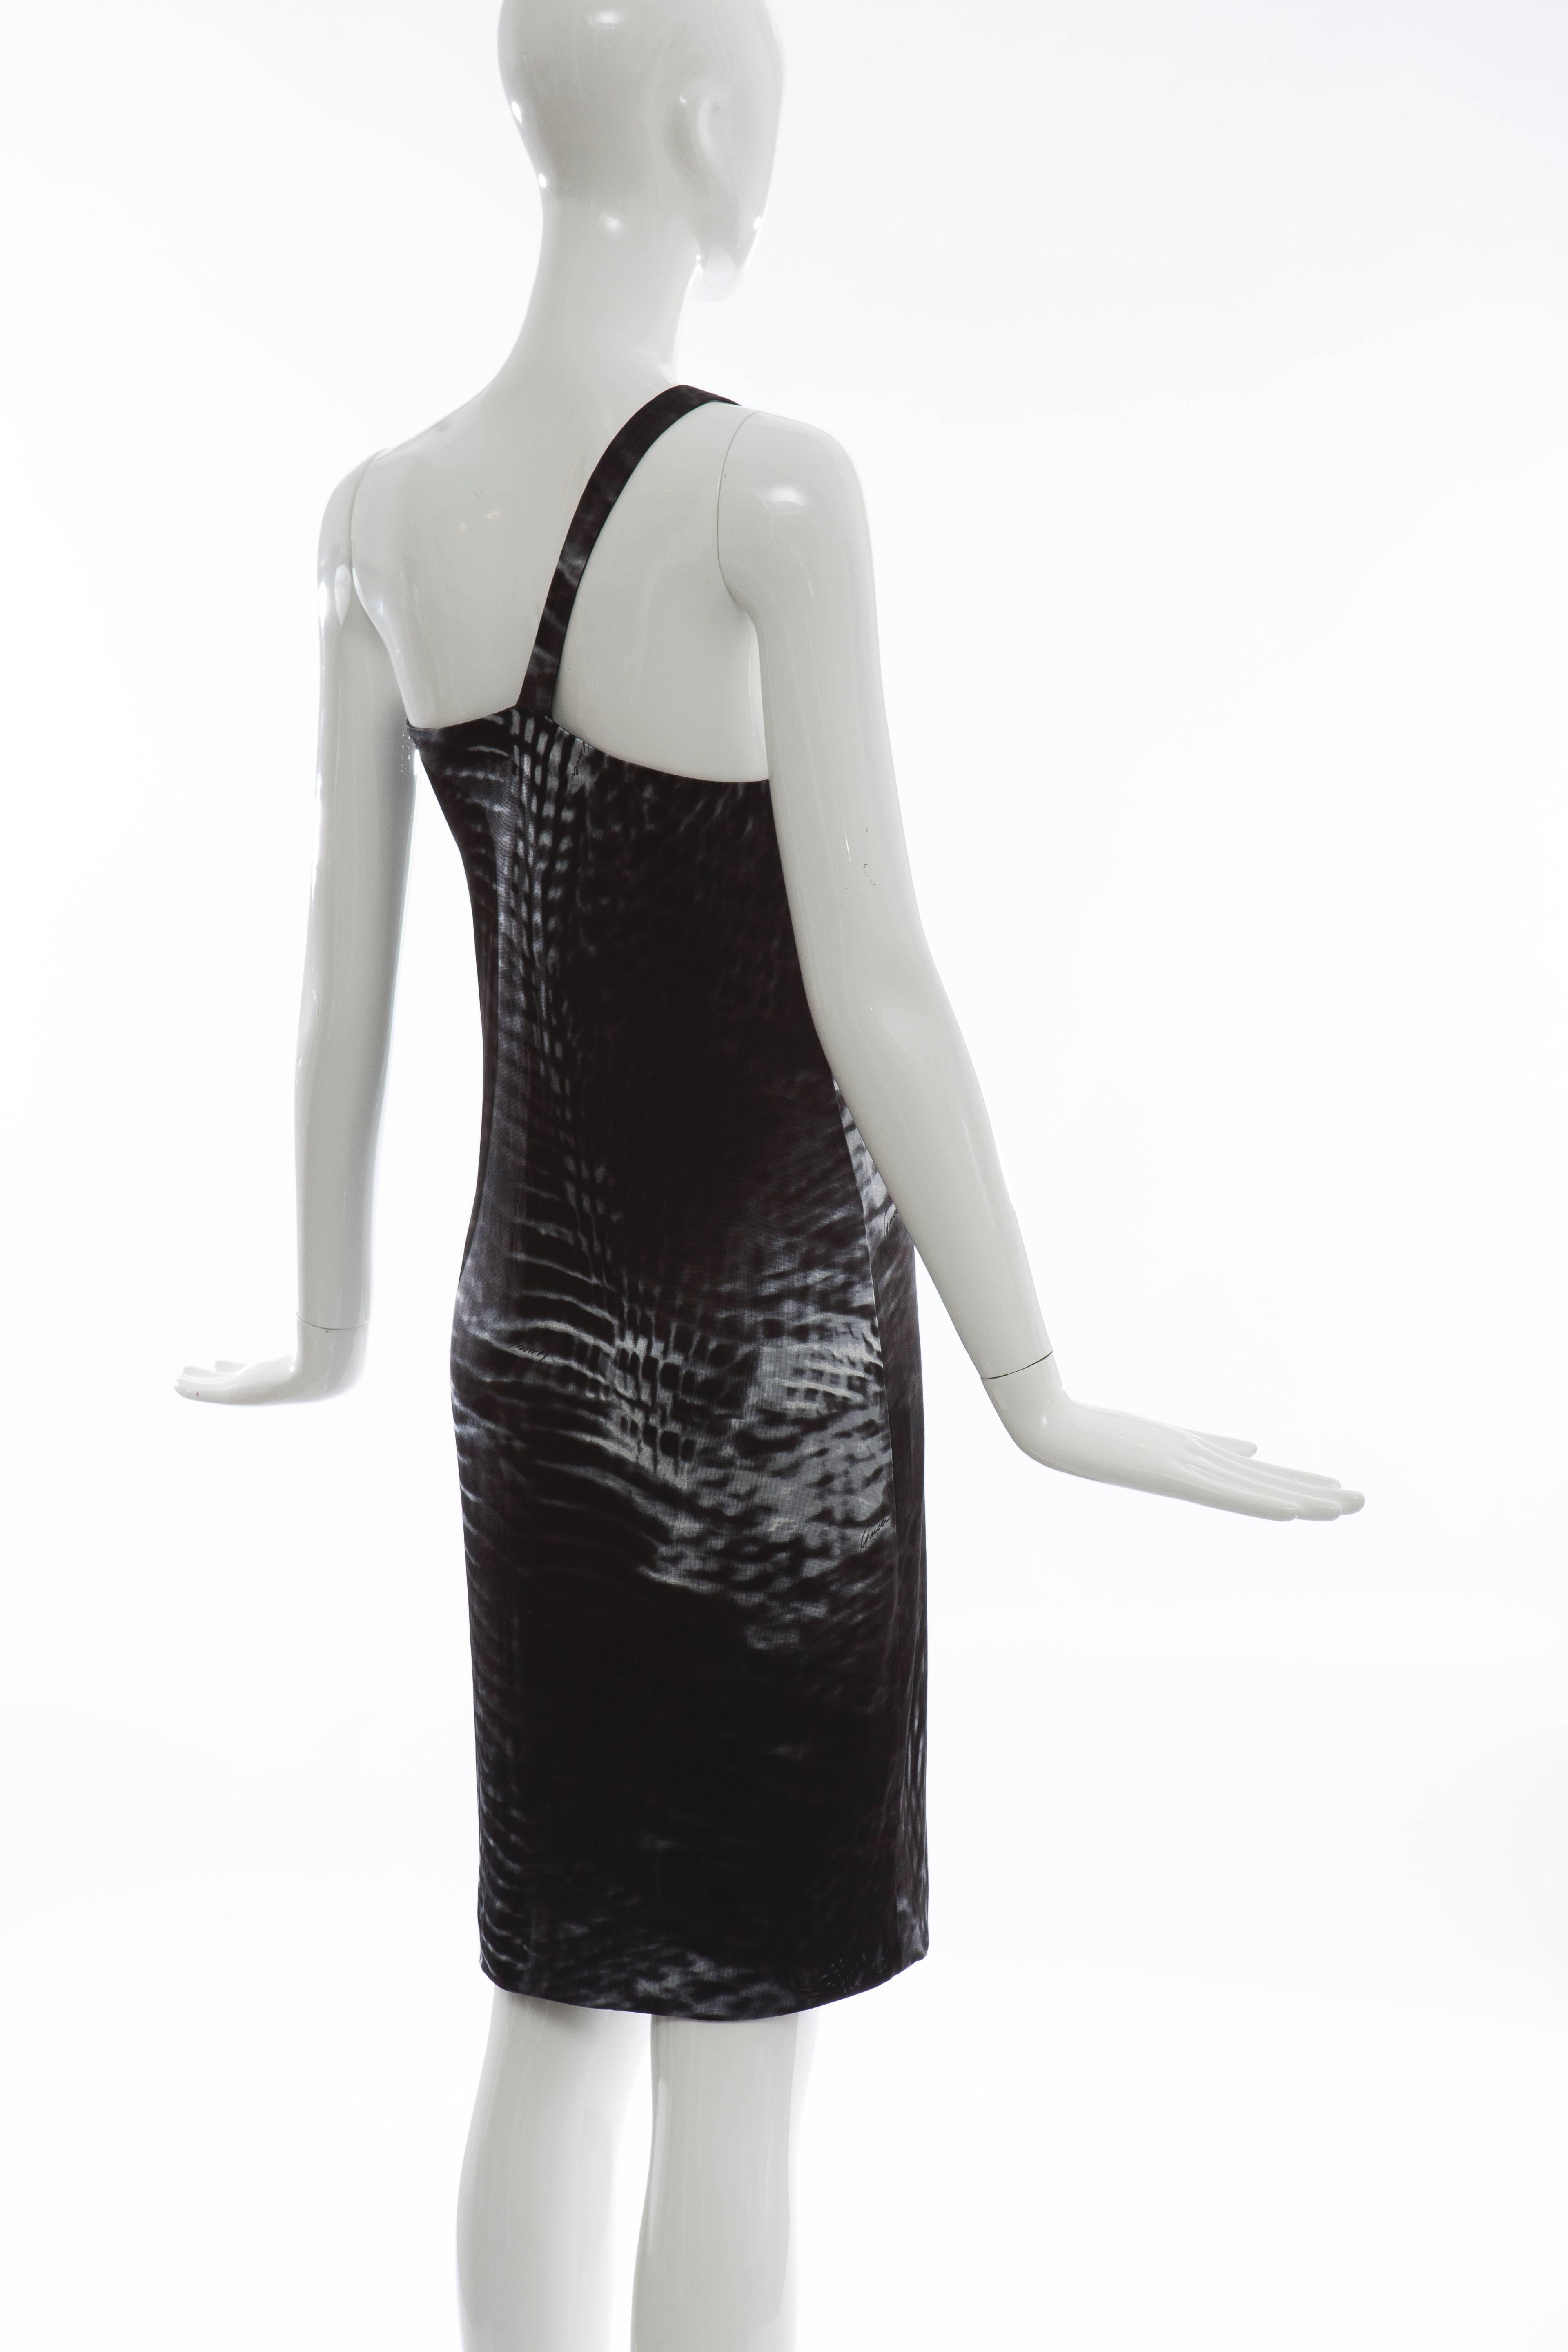 Tom Ford for Gucci Runway Black One-Shoulder Printed Dress , Spring 2000 For Sale 3